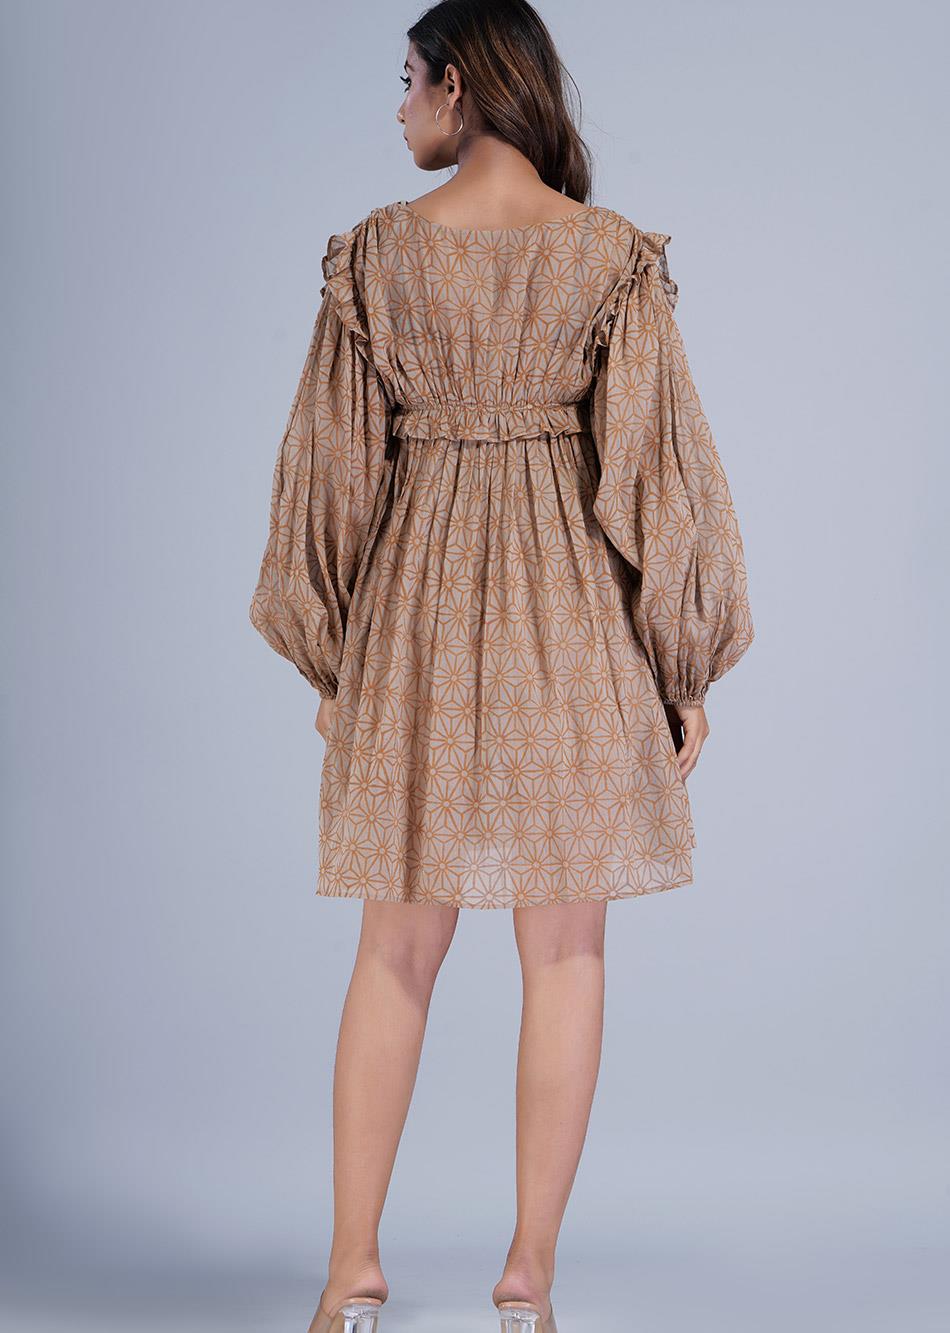 Brown Short Gathered Dress By Jovi Fashion